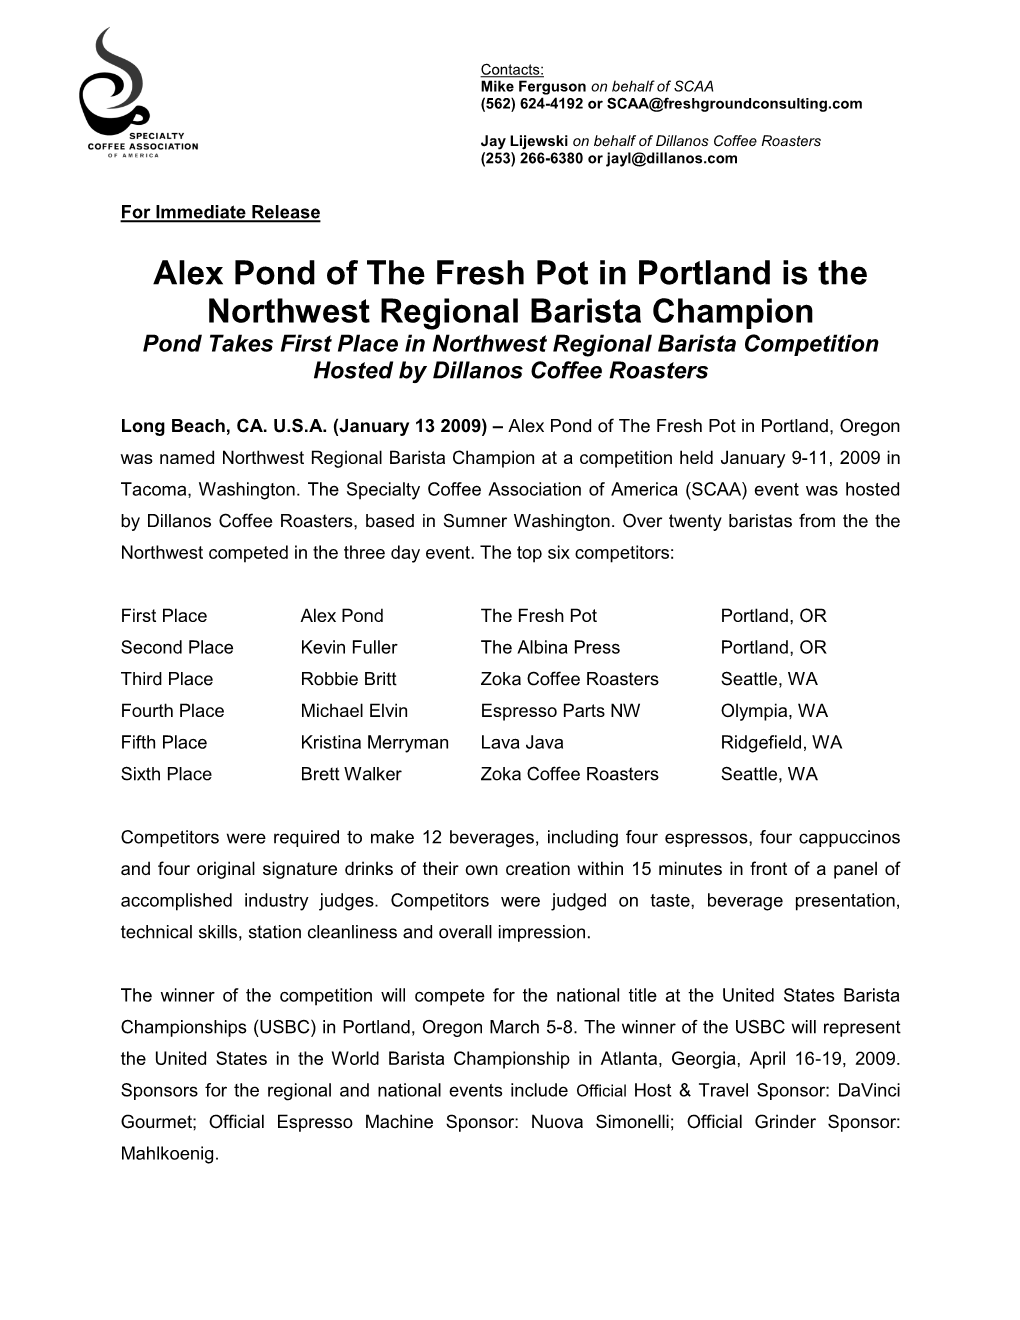 Alex Pond of the Fresh Pot in Portland Is the Northwest Regional